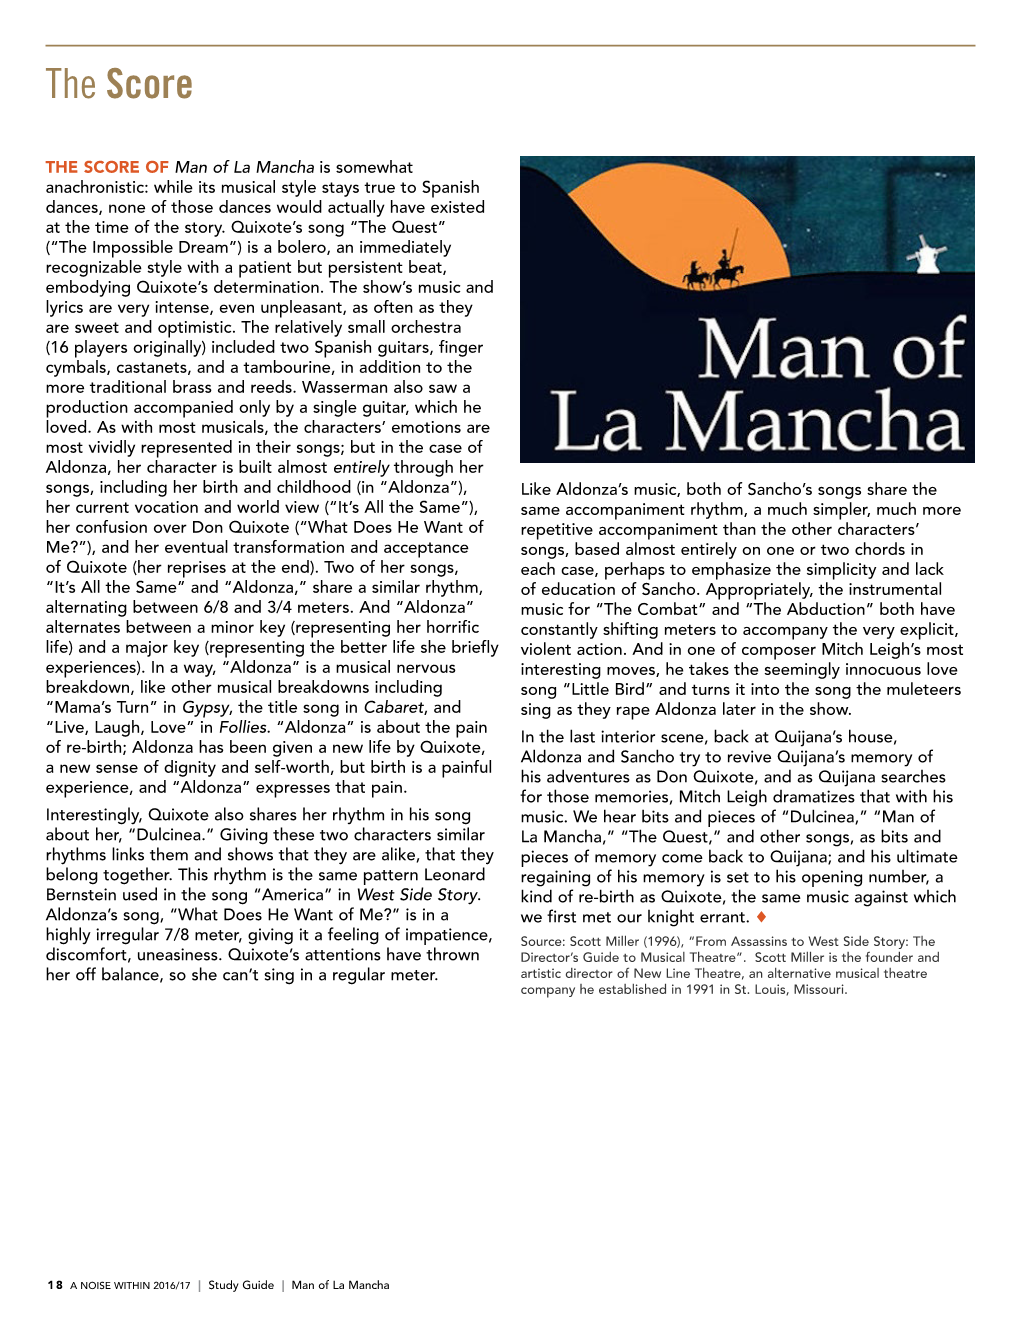 The Score of Man of La Mancha